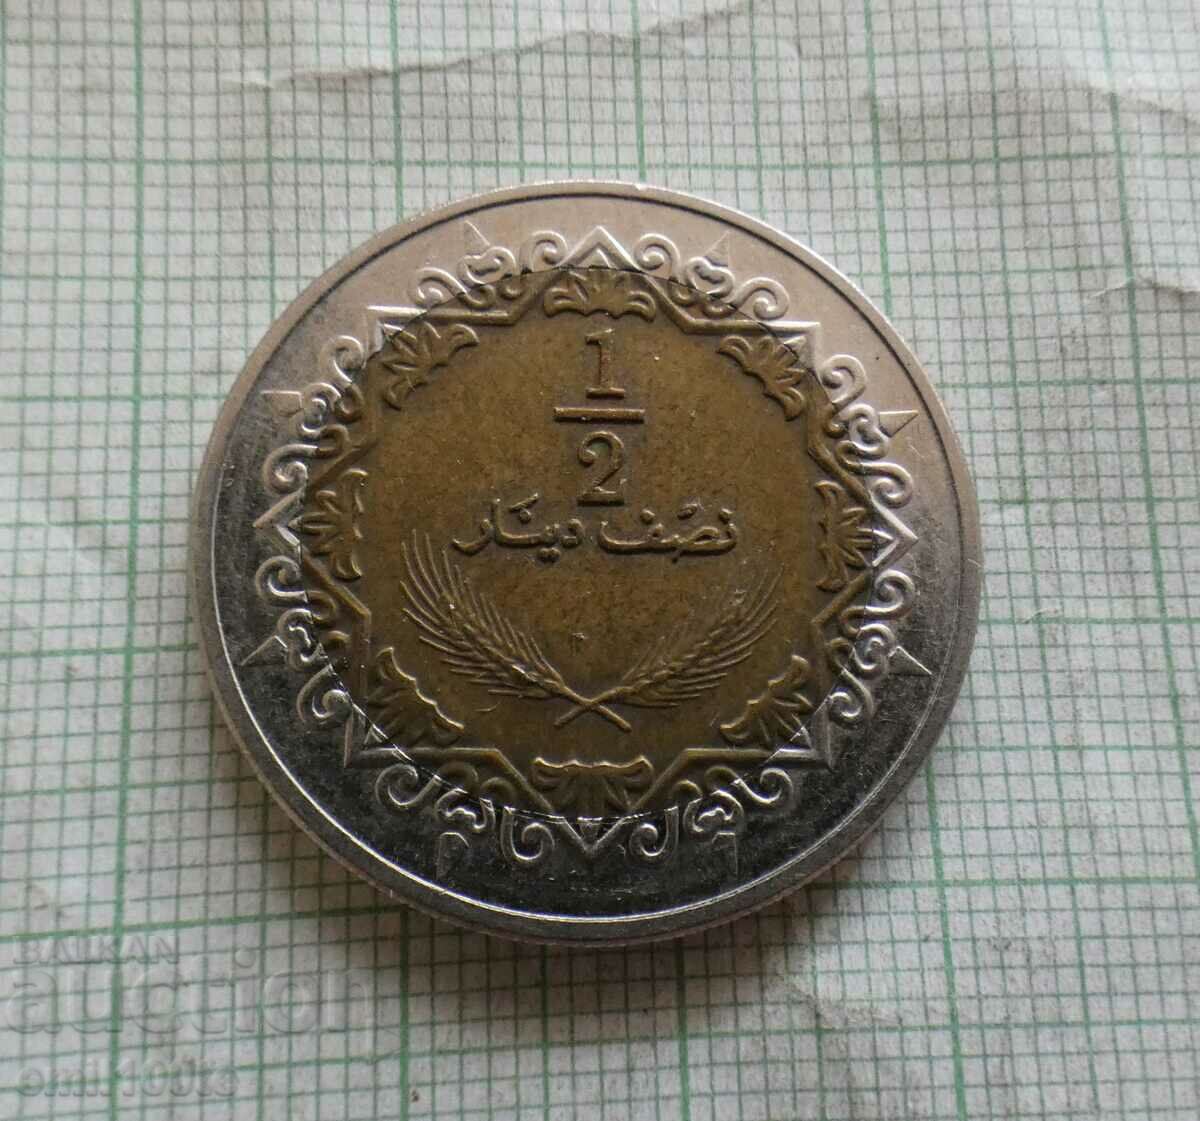 1/2 dinar 2009 Libya